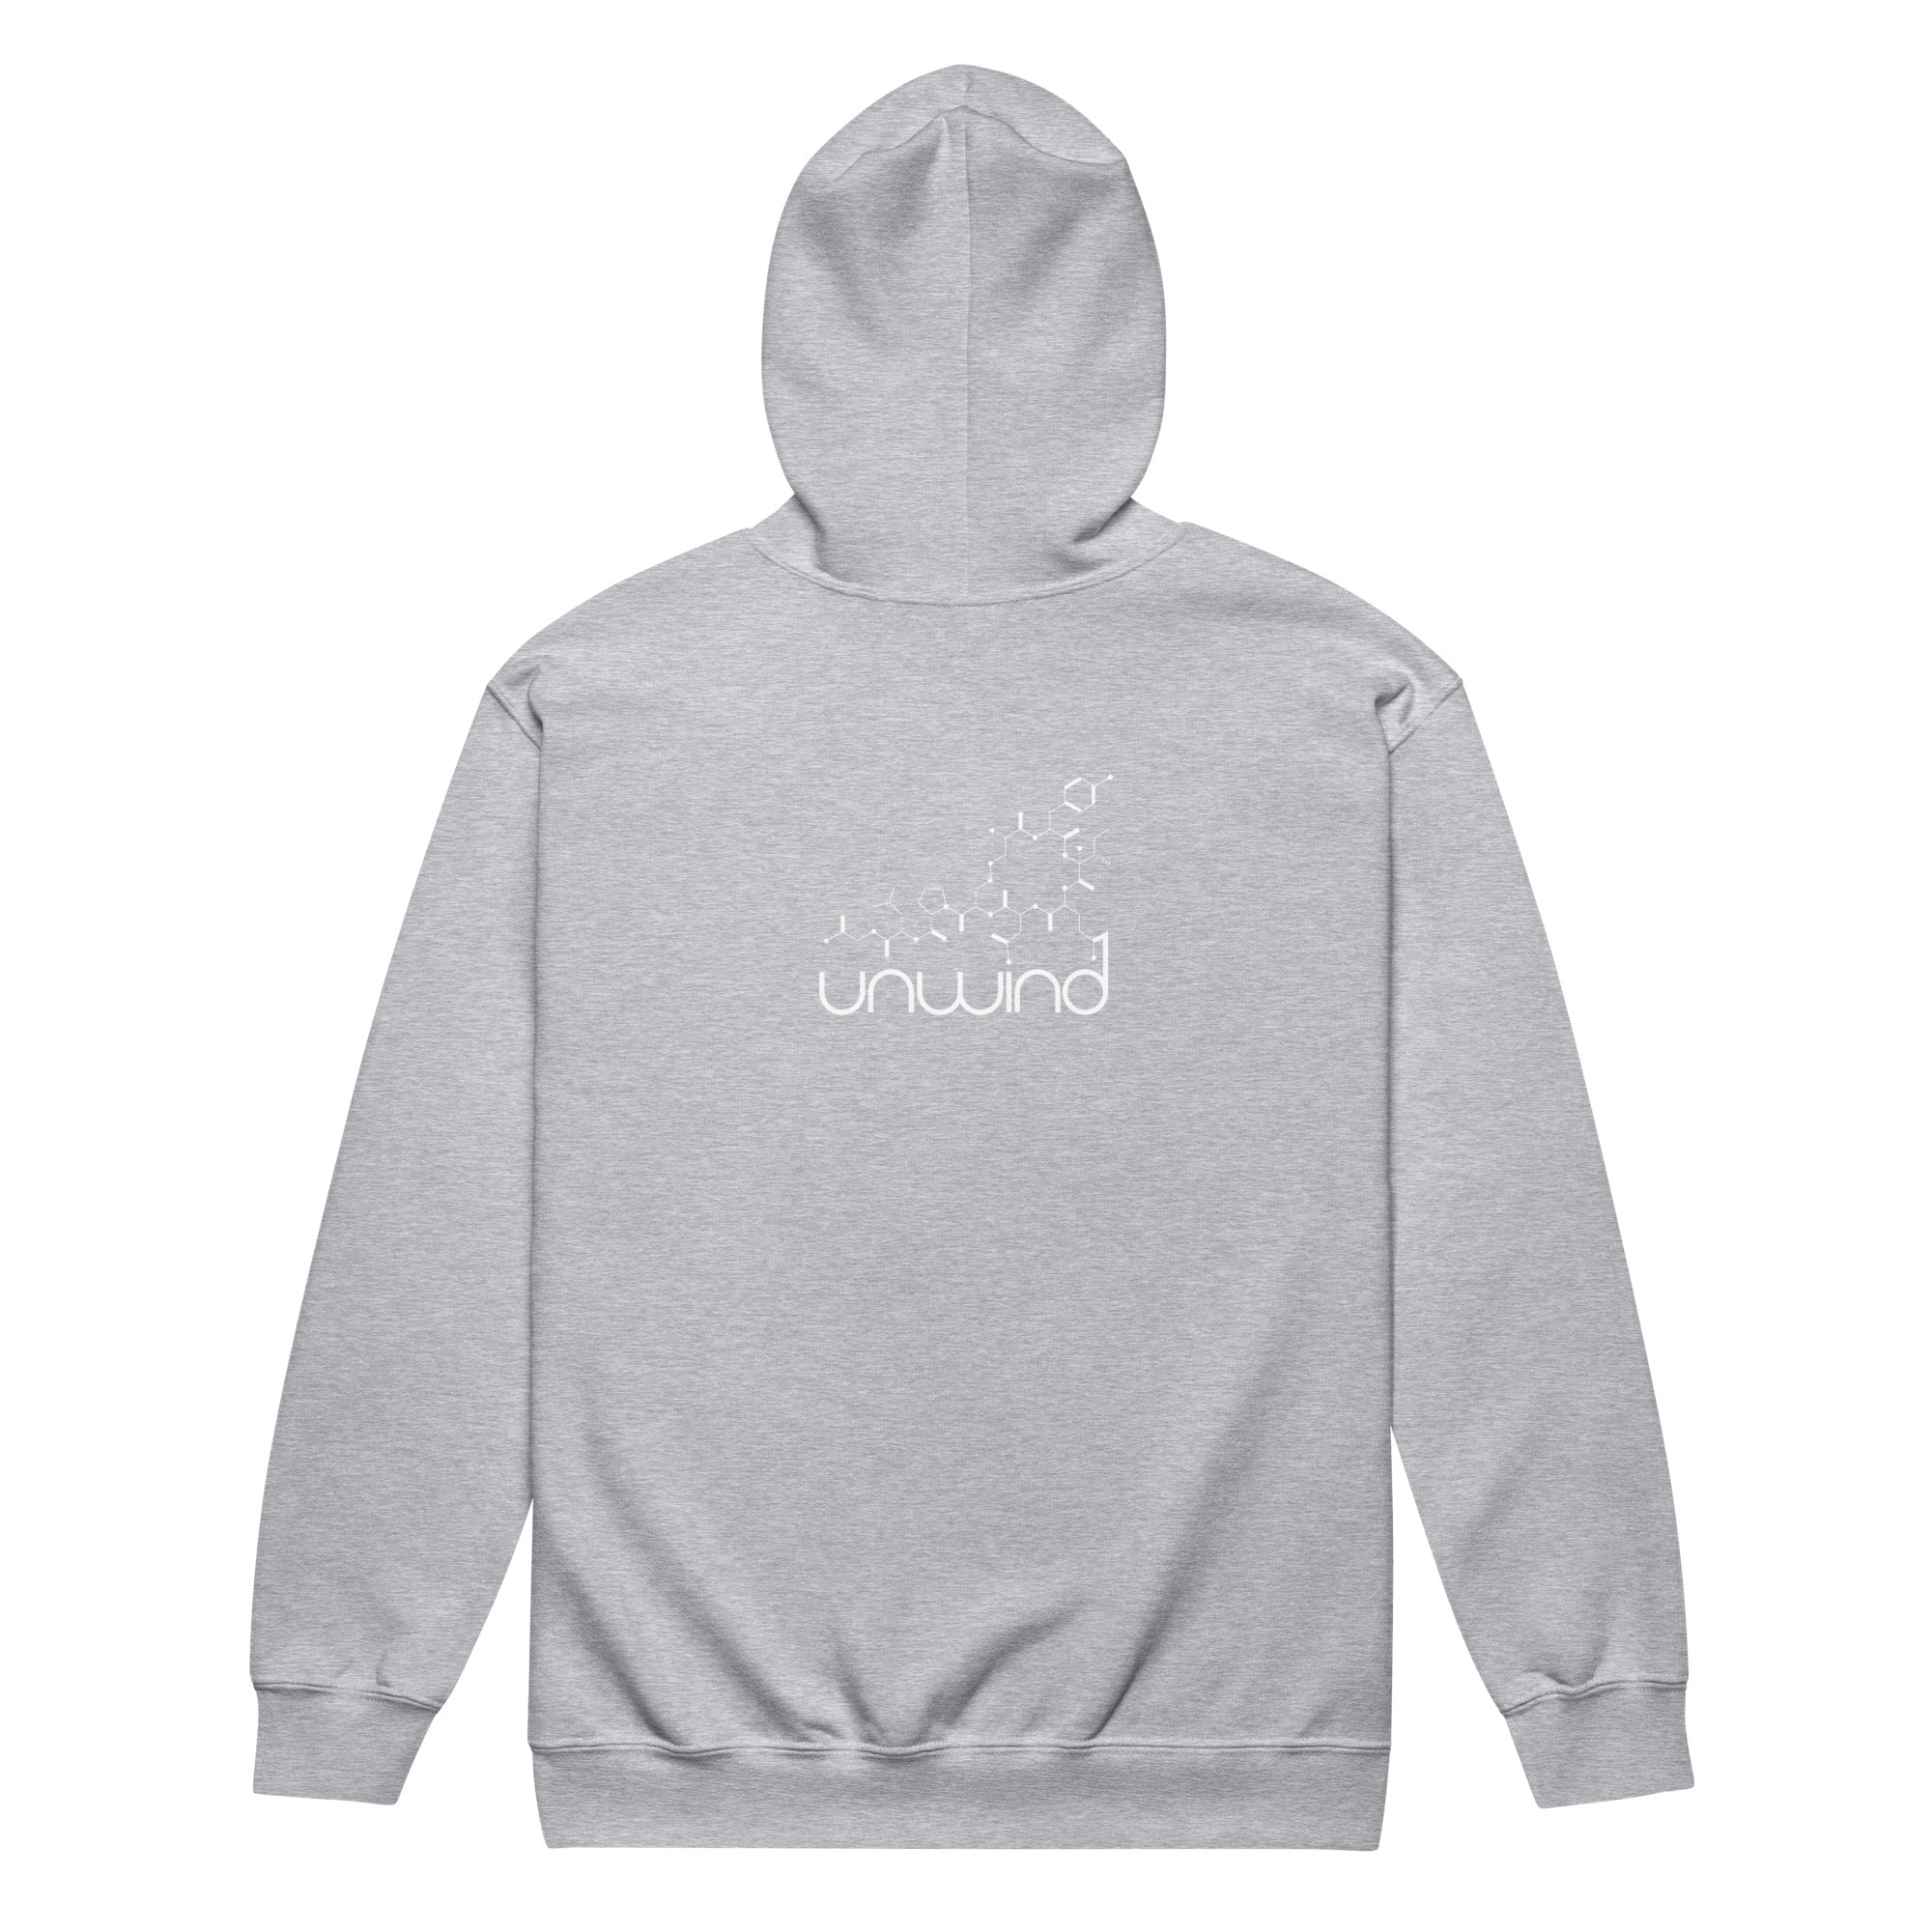 Unisex heavy blend zip hoodie HEALER